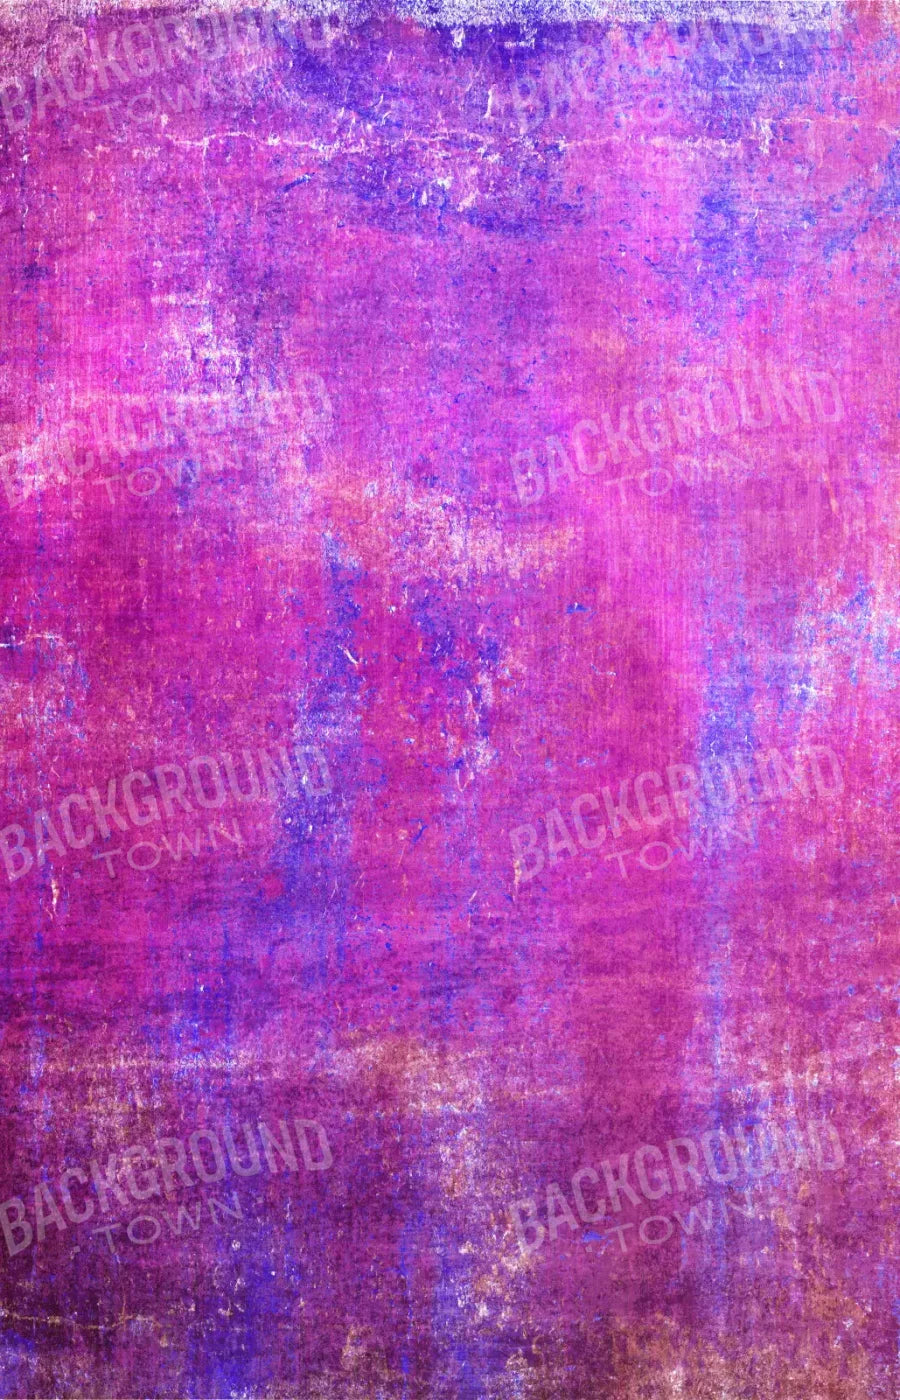 Becca 8X12 Ultracloth ( 96 X 144 Inch ) Backdrop